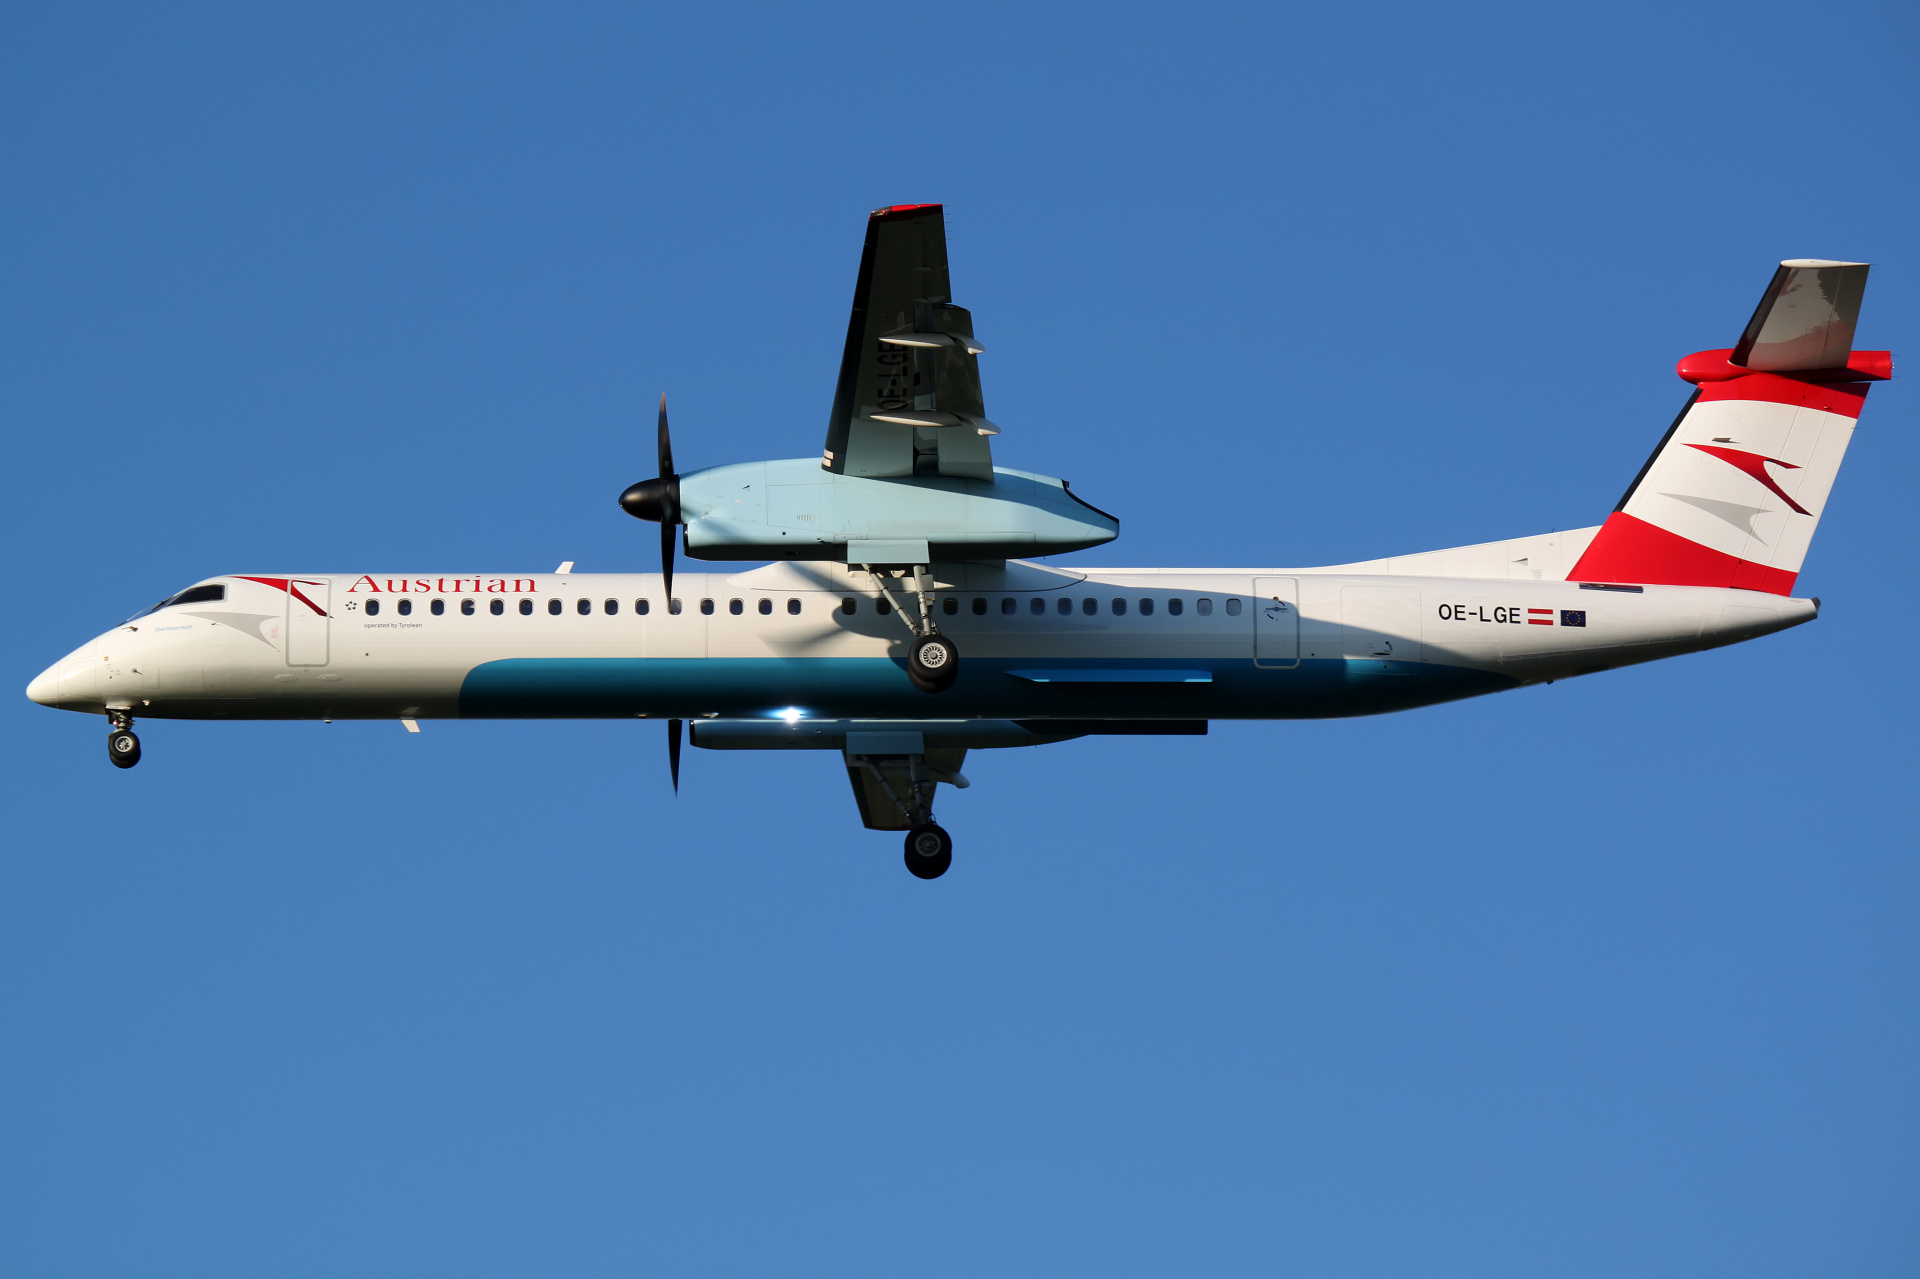 OE-LGE (Tyrolean) (Aircraft » EPWA Spotting » De Havilland Canada DHC-8 Dash 8 » Austrian Airlines)